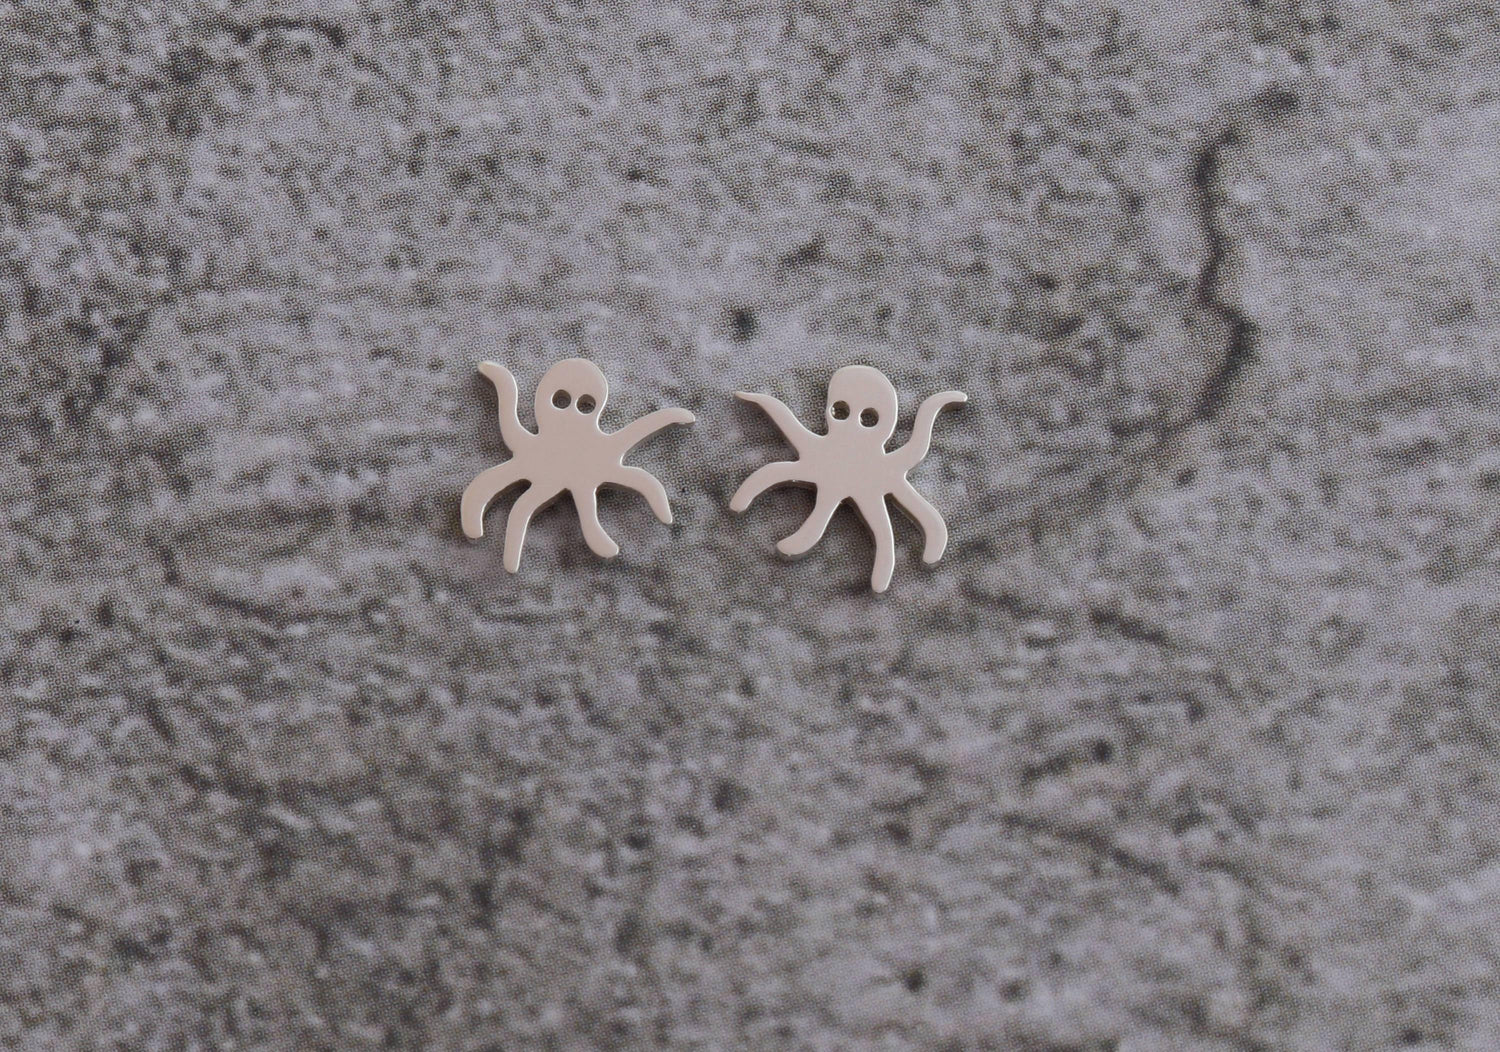 Octopus Stud Earrings - Sweet November Jewelry